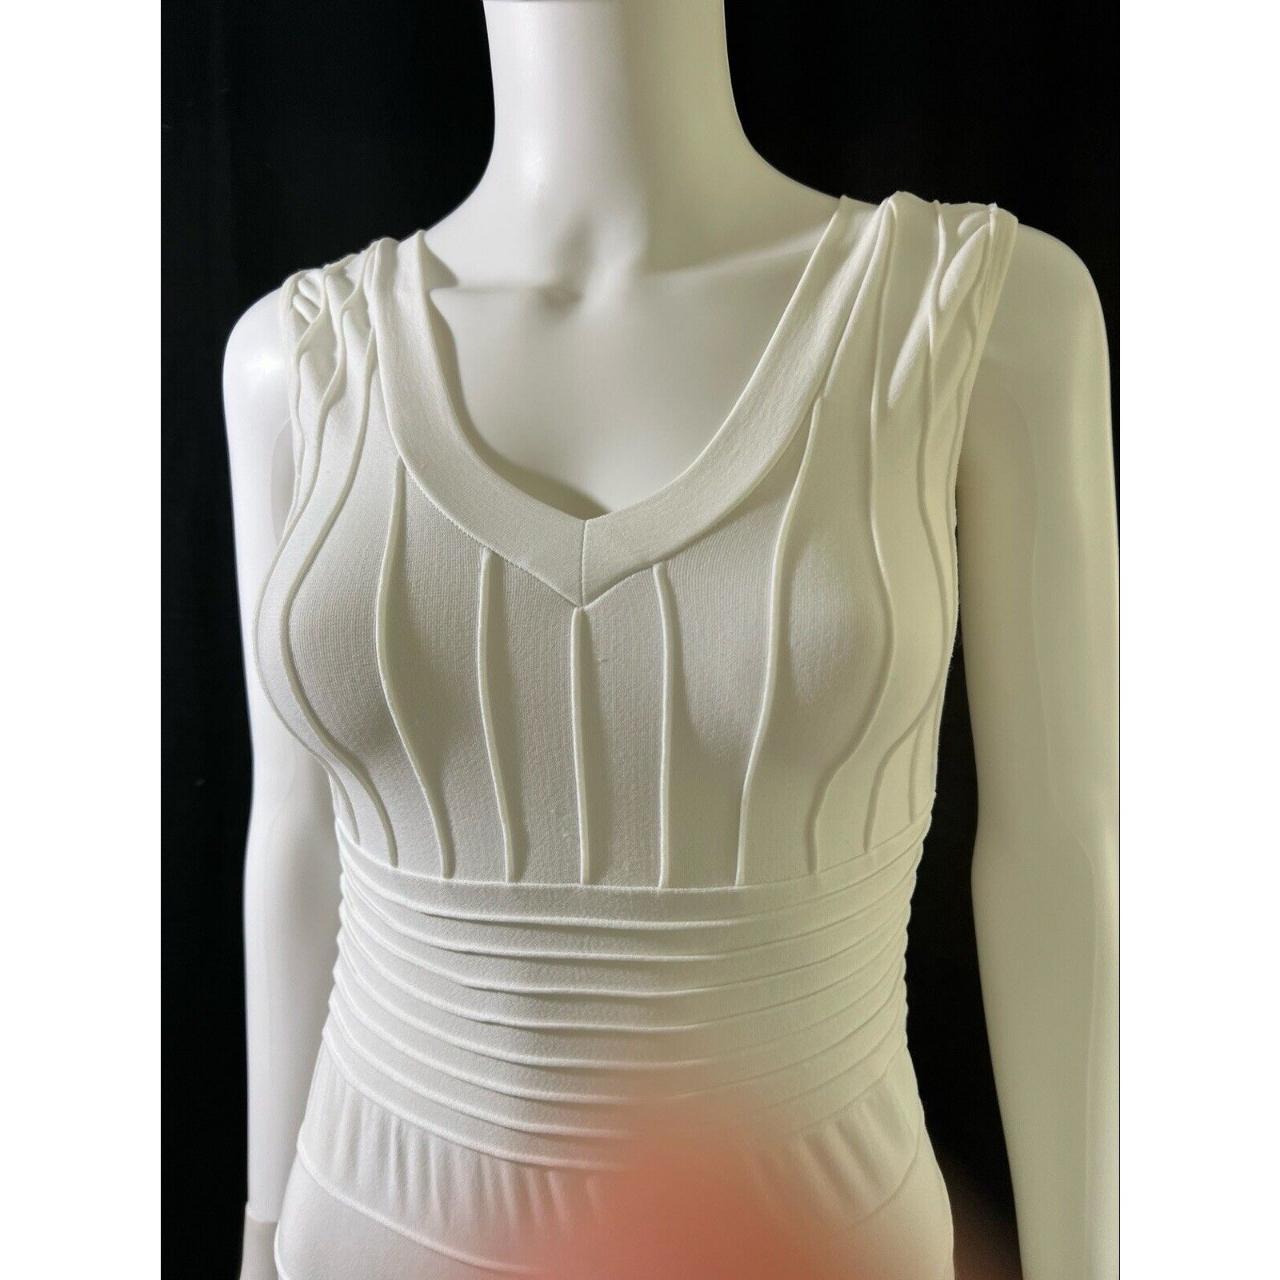 Colorful Standard Women's White Dress (3)